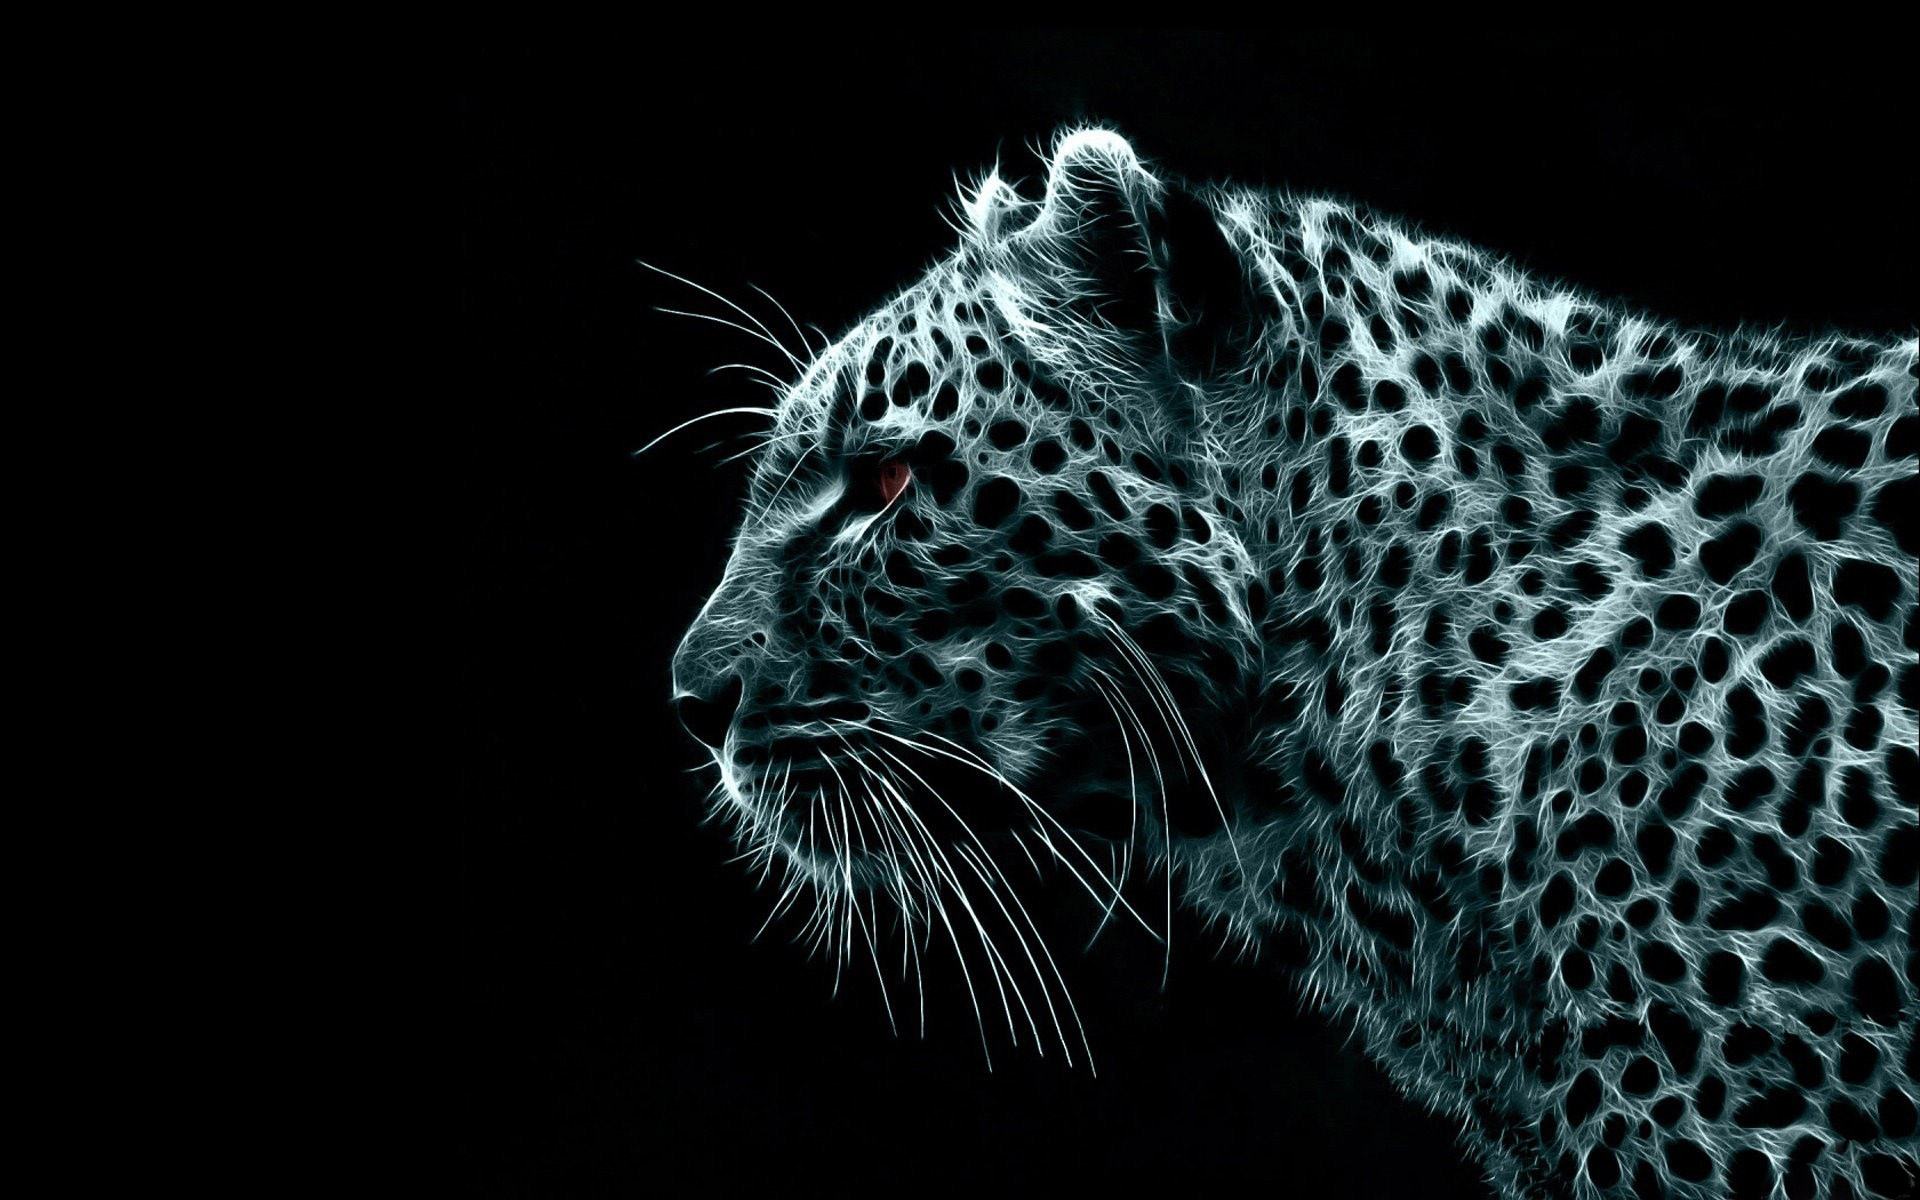 snow leopard server wallpaper 2015 - Grasscloth Wallpaper